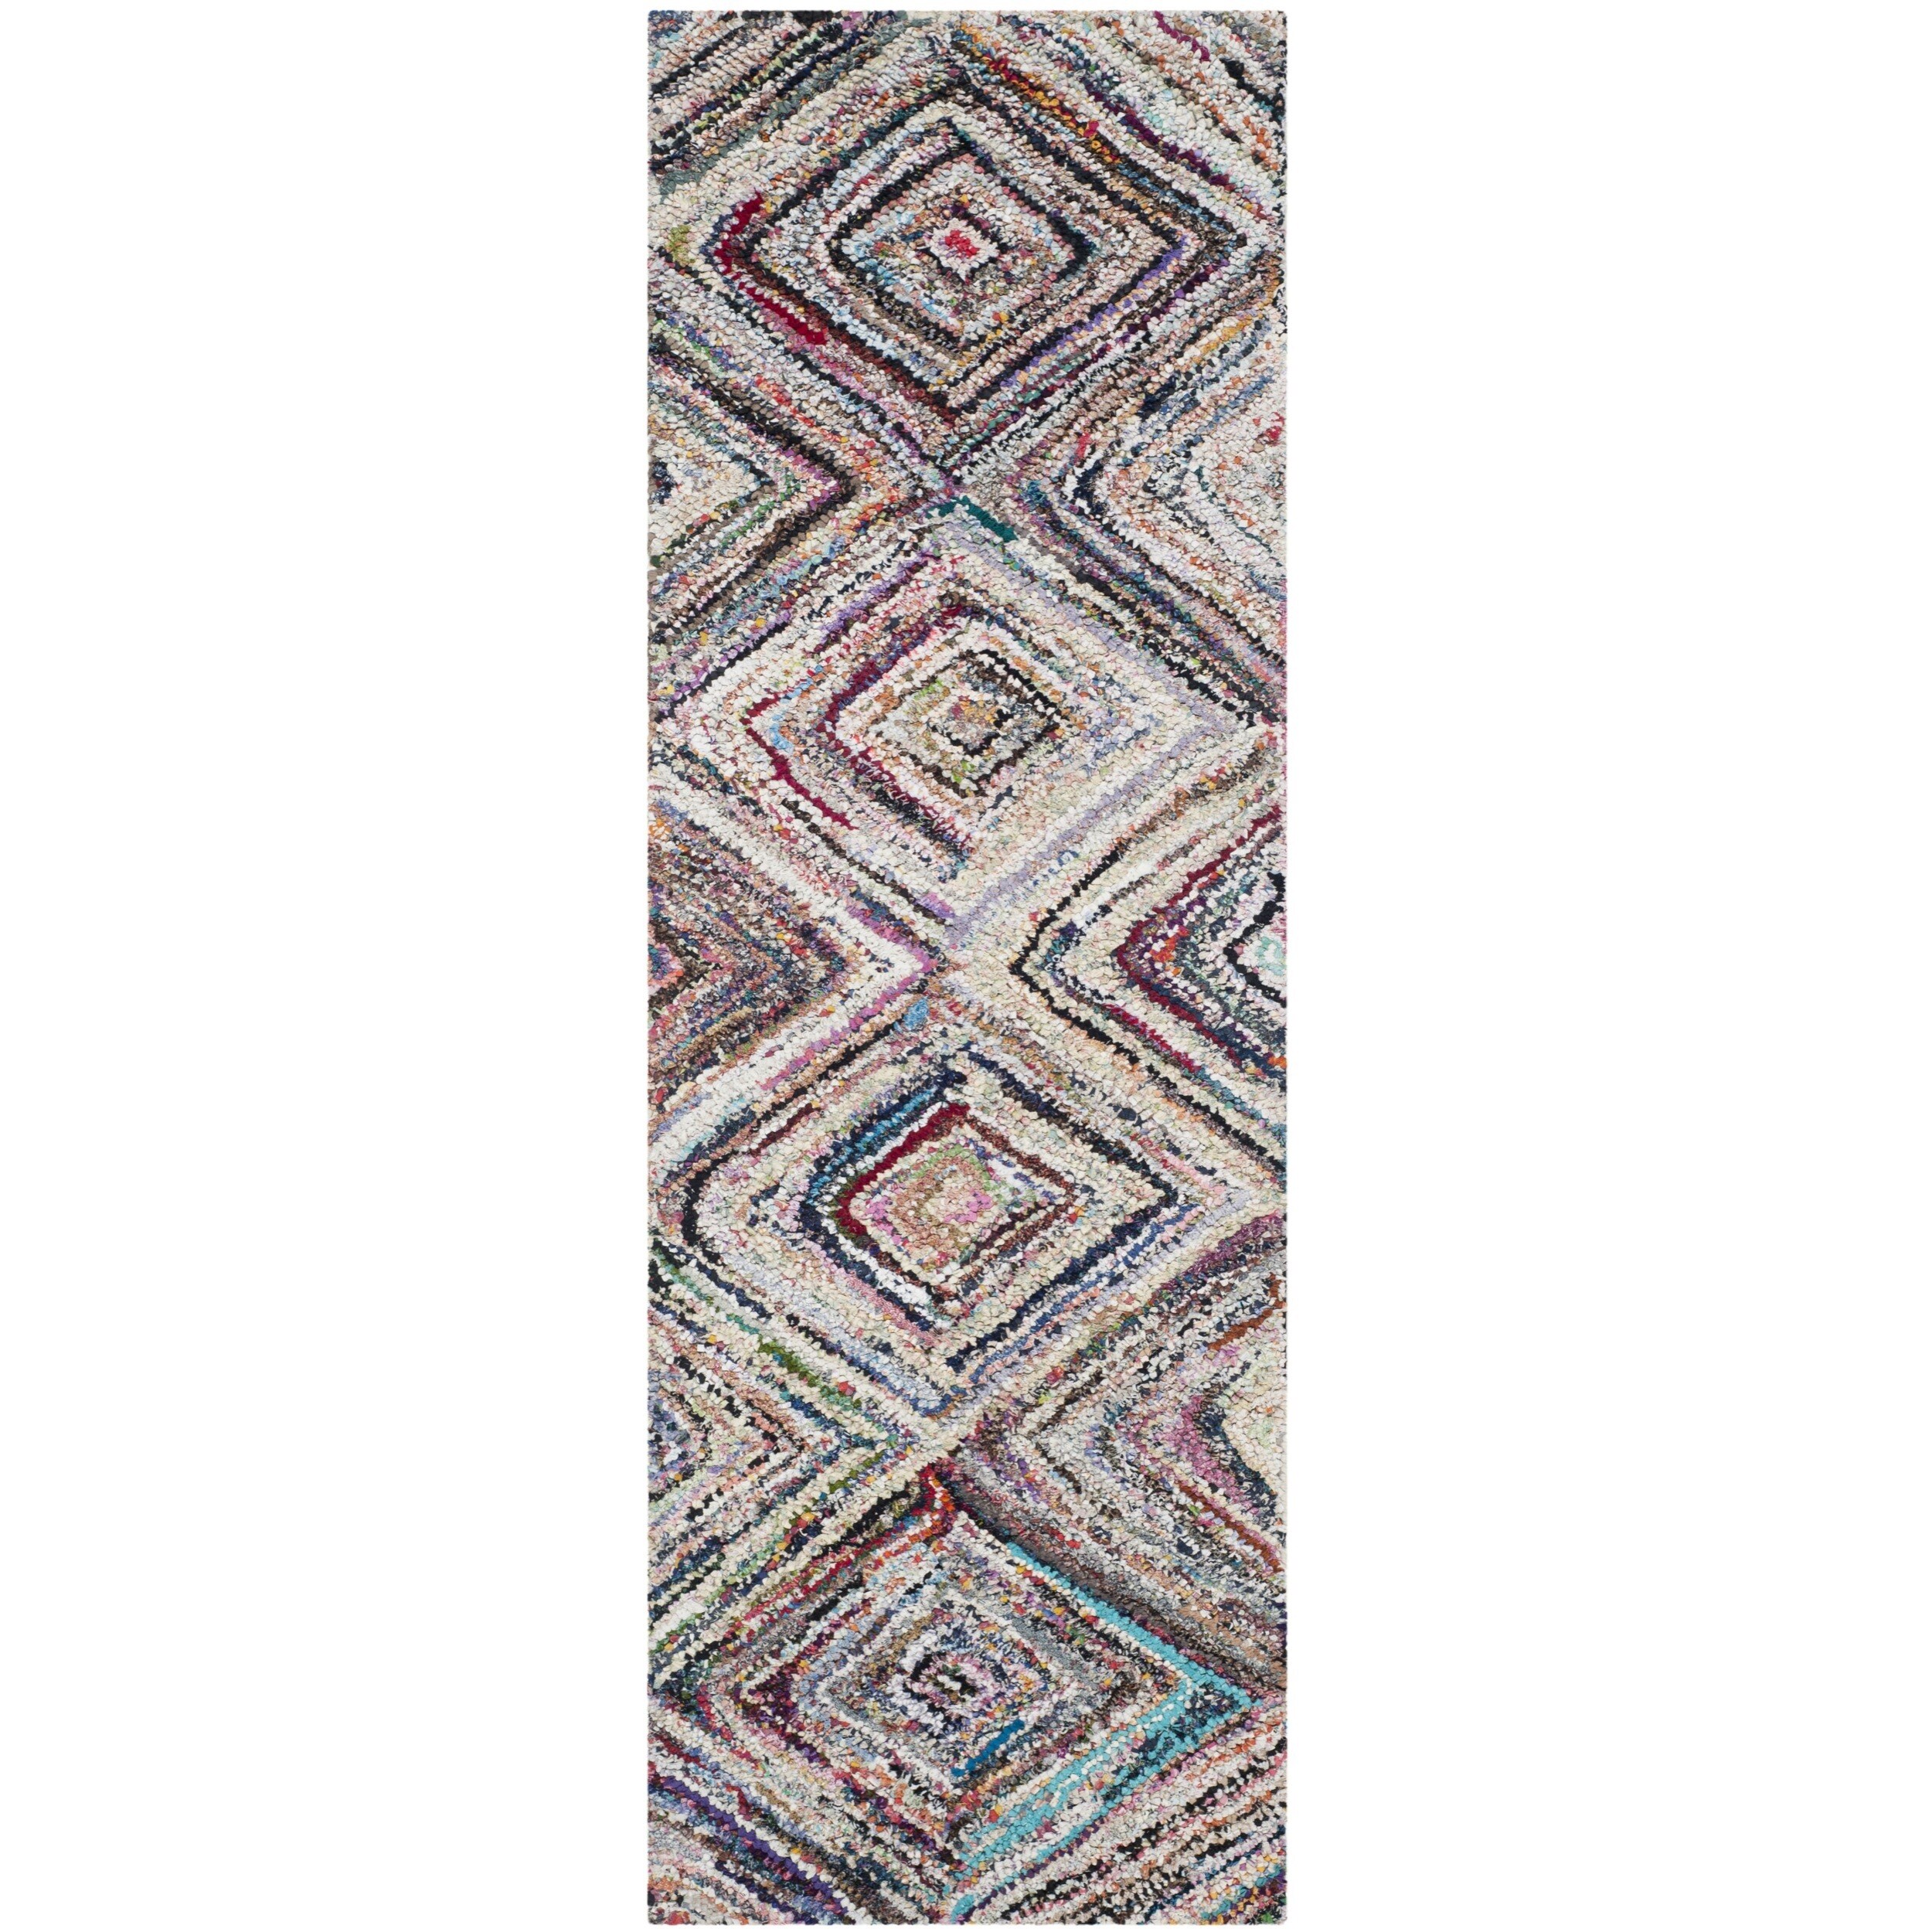 Safavieh Handmade Nantucket Multicolored Cotton Rug (23 X 7)